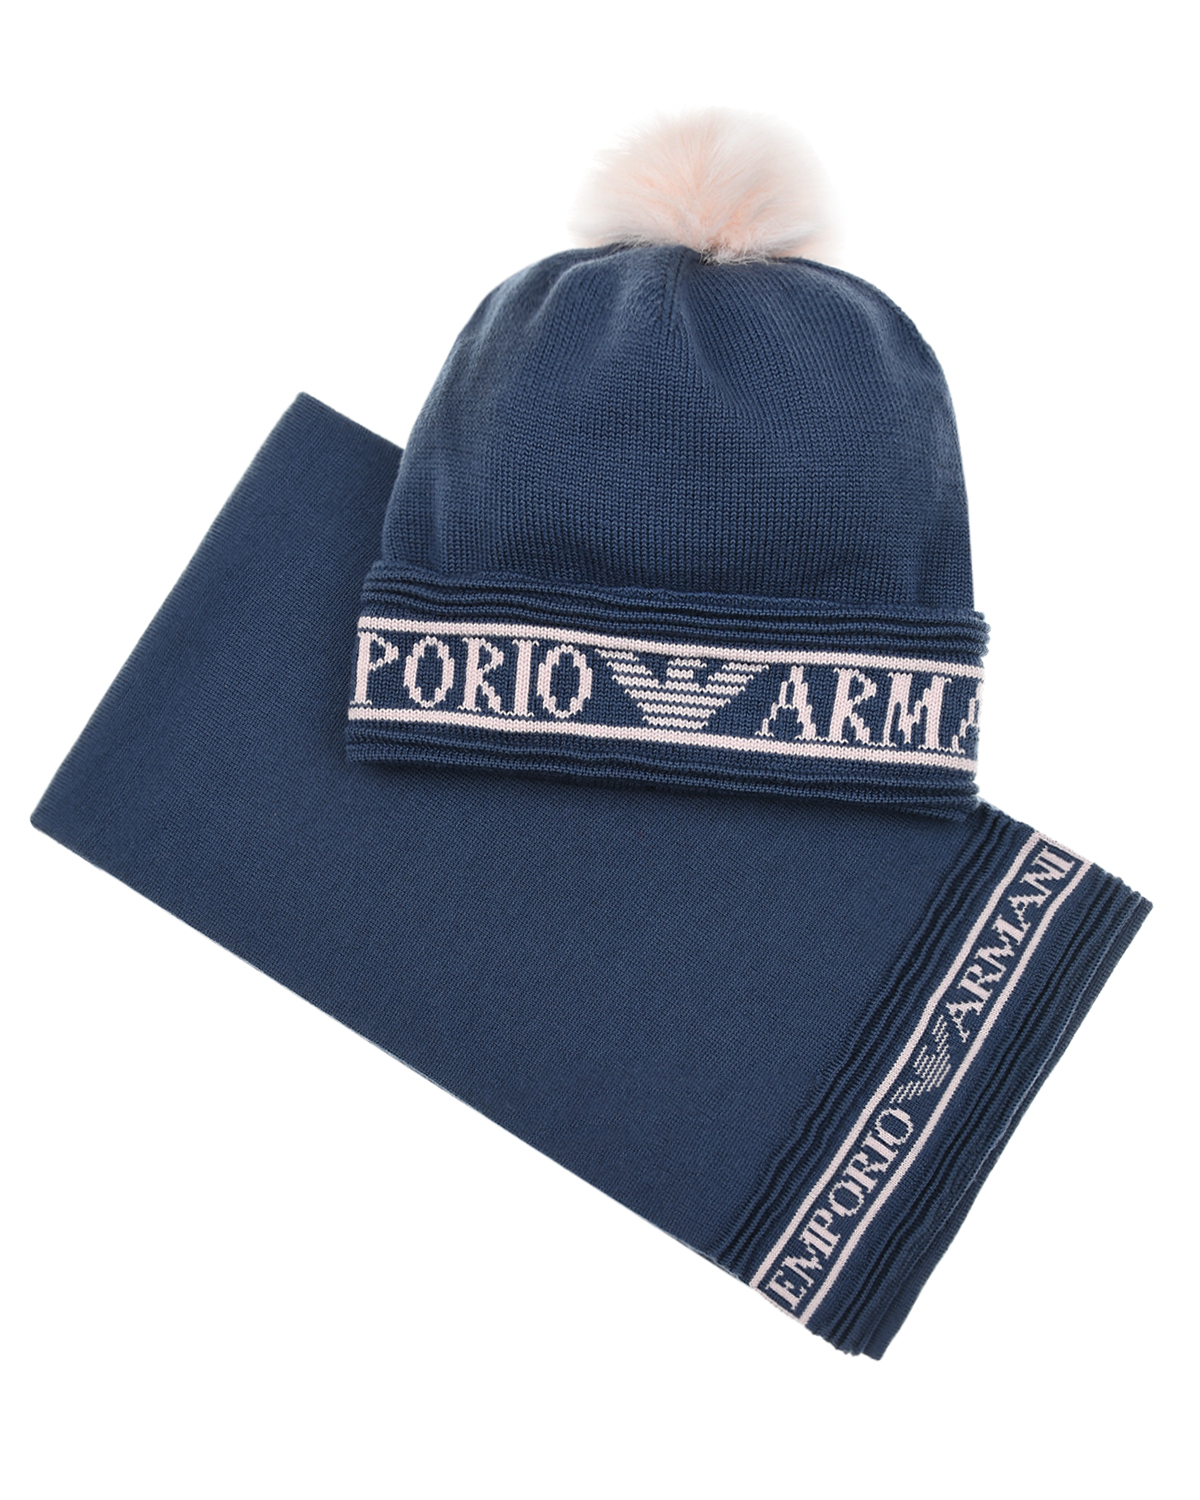 Комплект из шапки с помпоном и шарфа, синий Emporio Armani детский, размер S